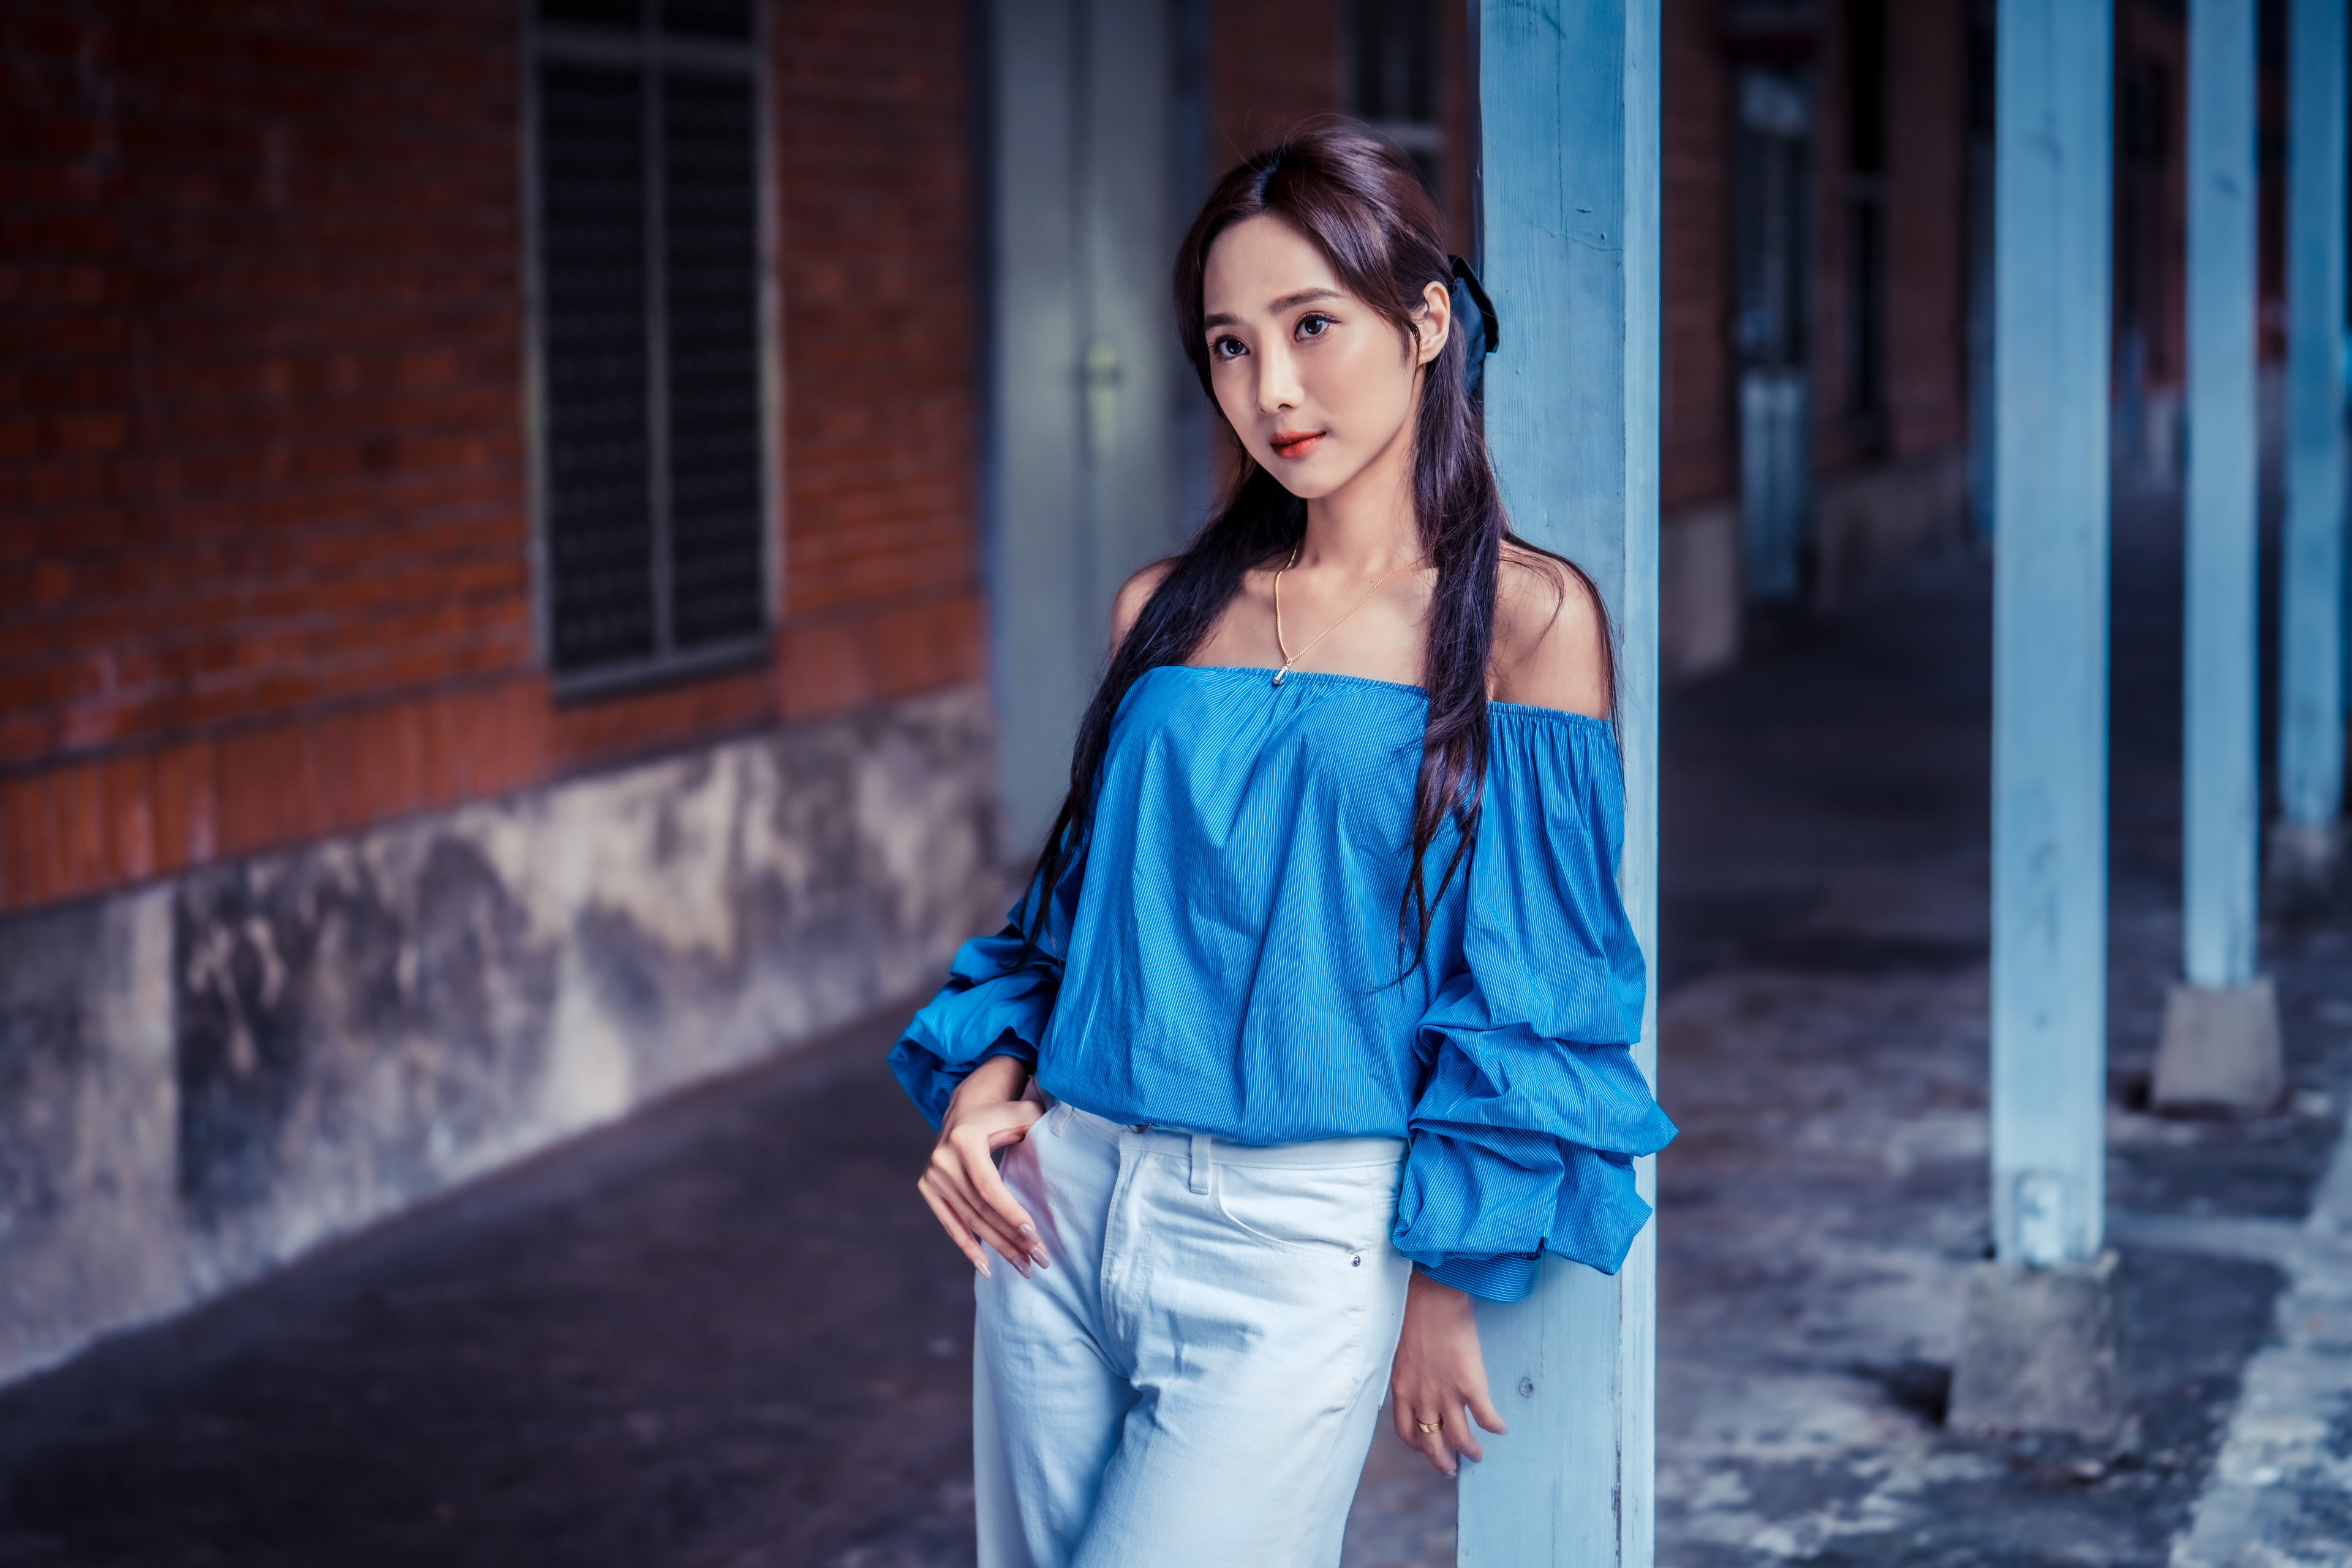 Asian Model Women Long Hair Dark Hair Column Jeans Blue Blouse Necklace Bricks Wall Window 3840x2560